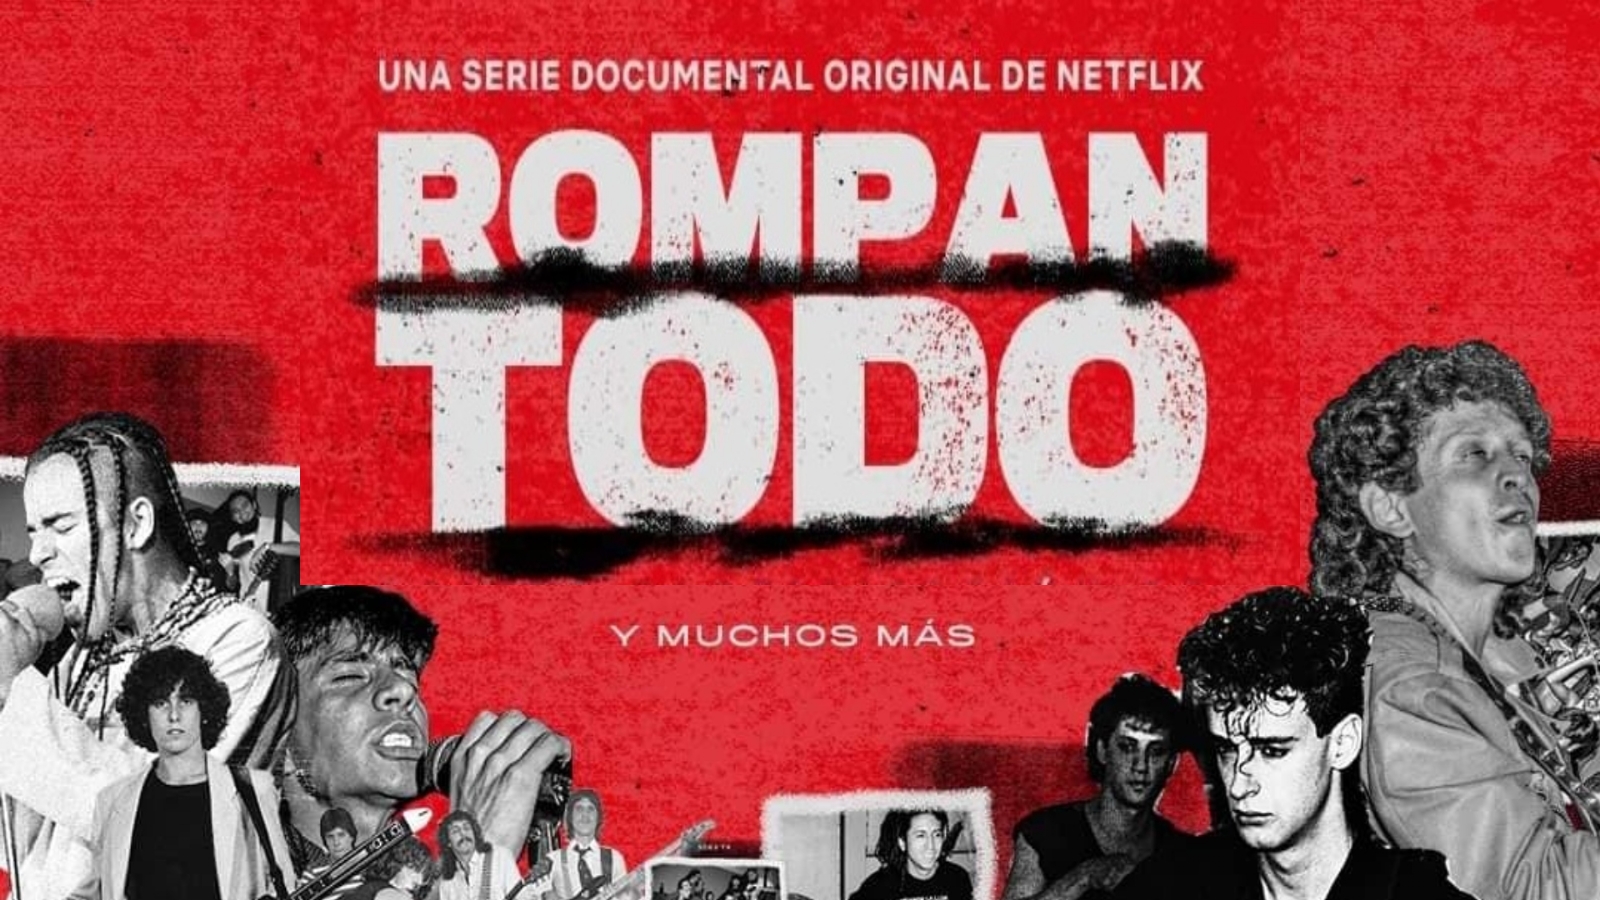 Rompan todo, el documental de Netflix sobre la historia del Rock Latino